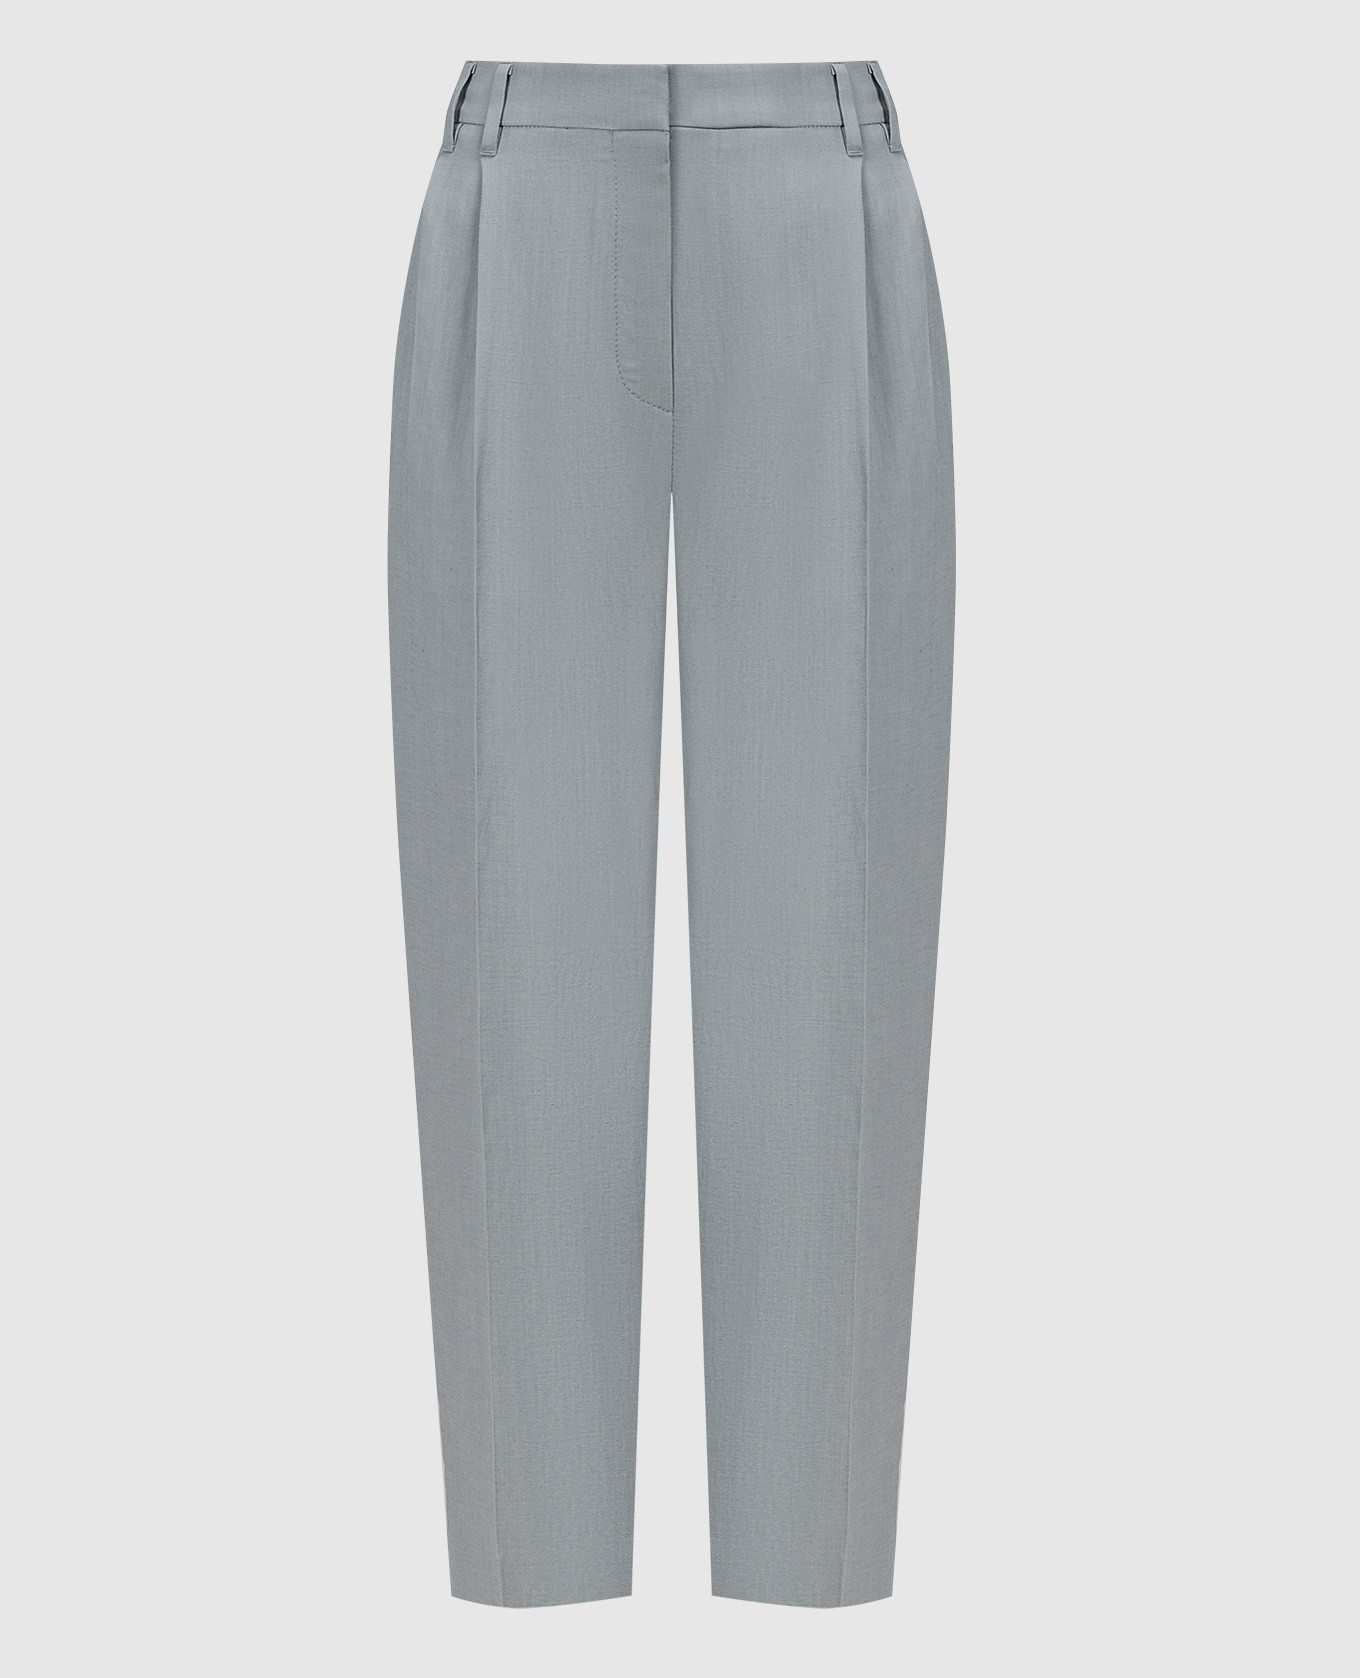 Gray linen pants with monil chain